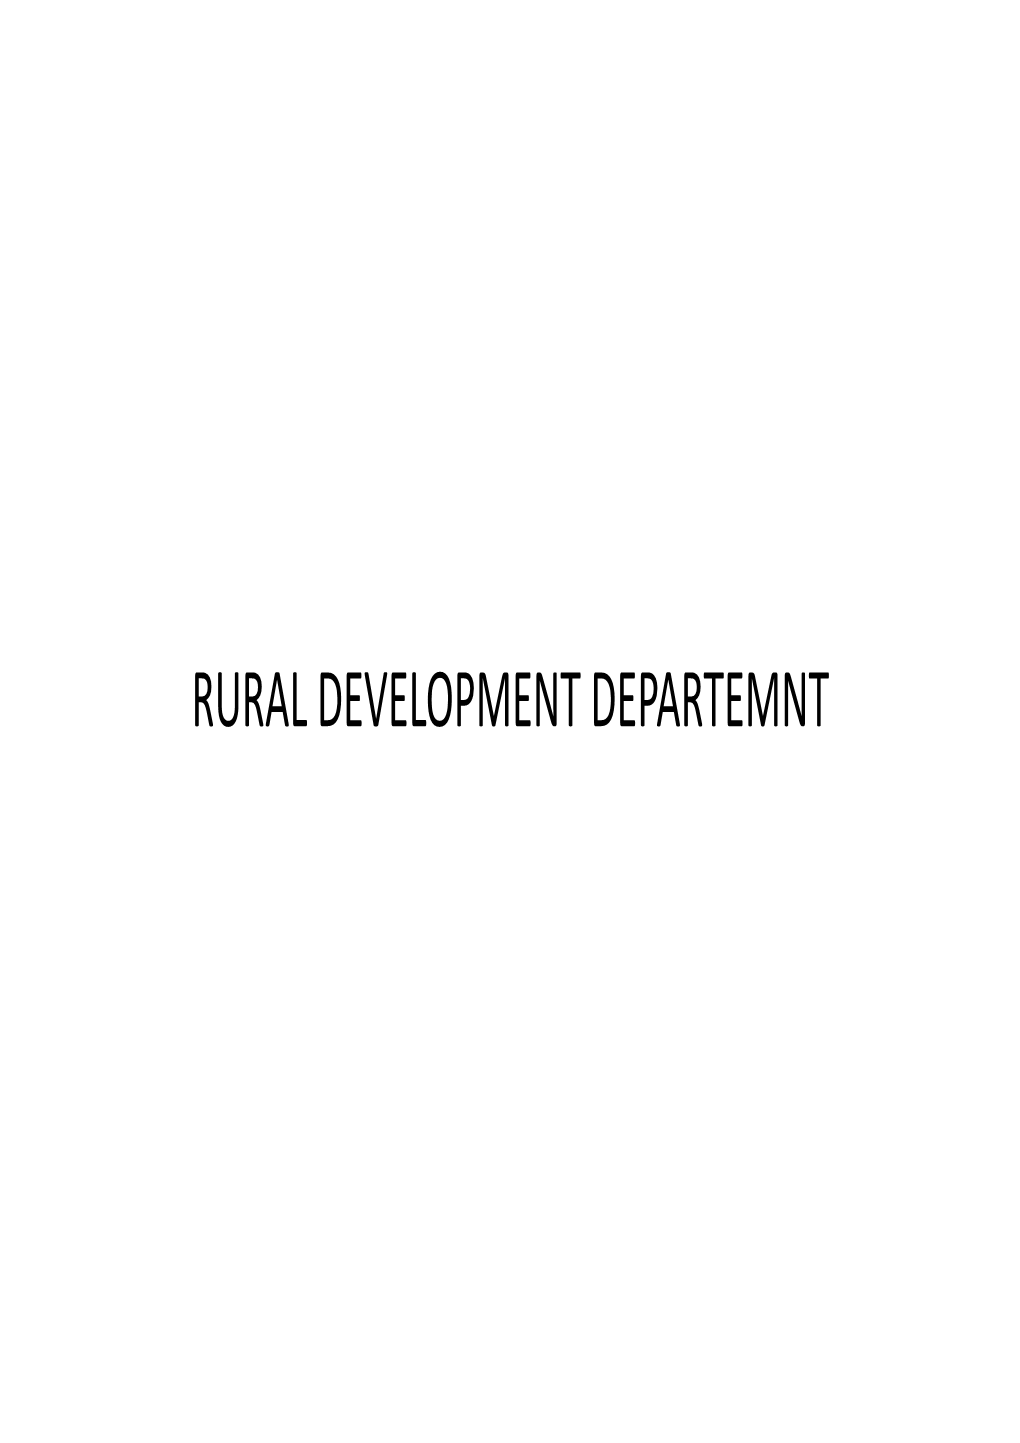 Rural Development Departemnt